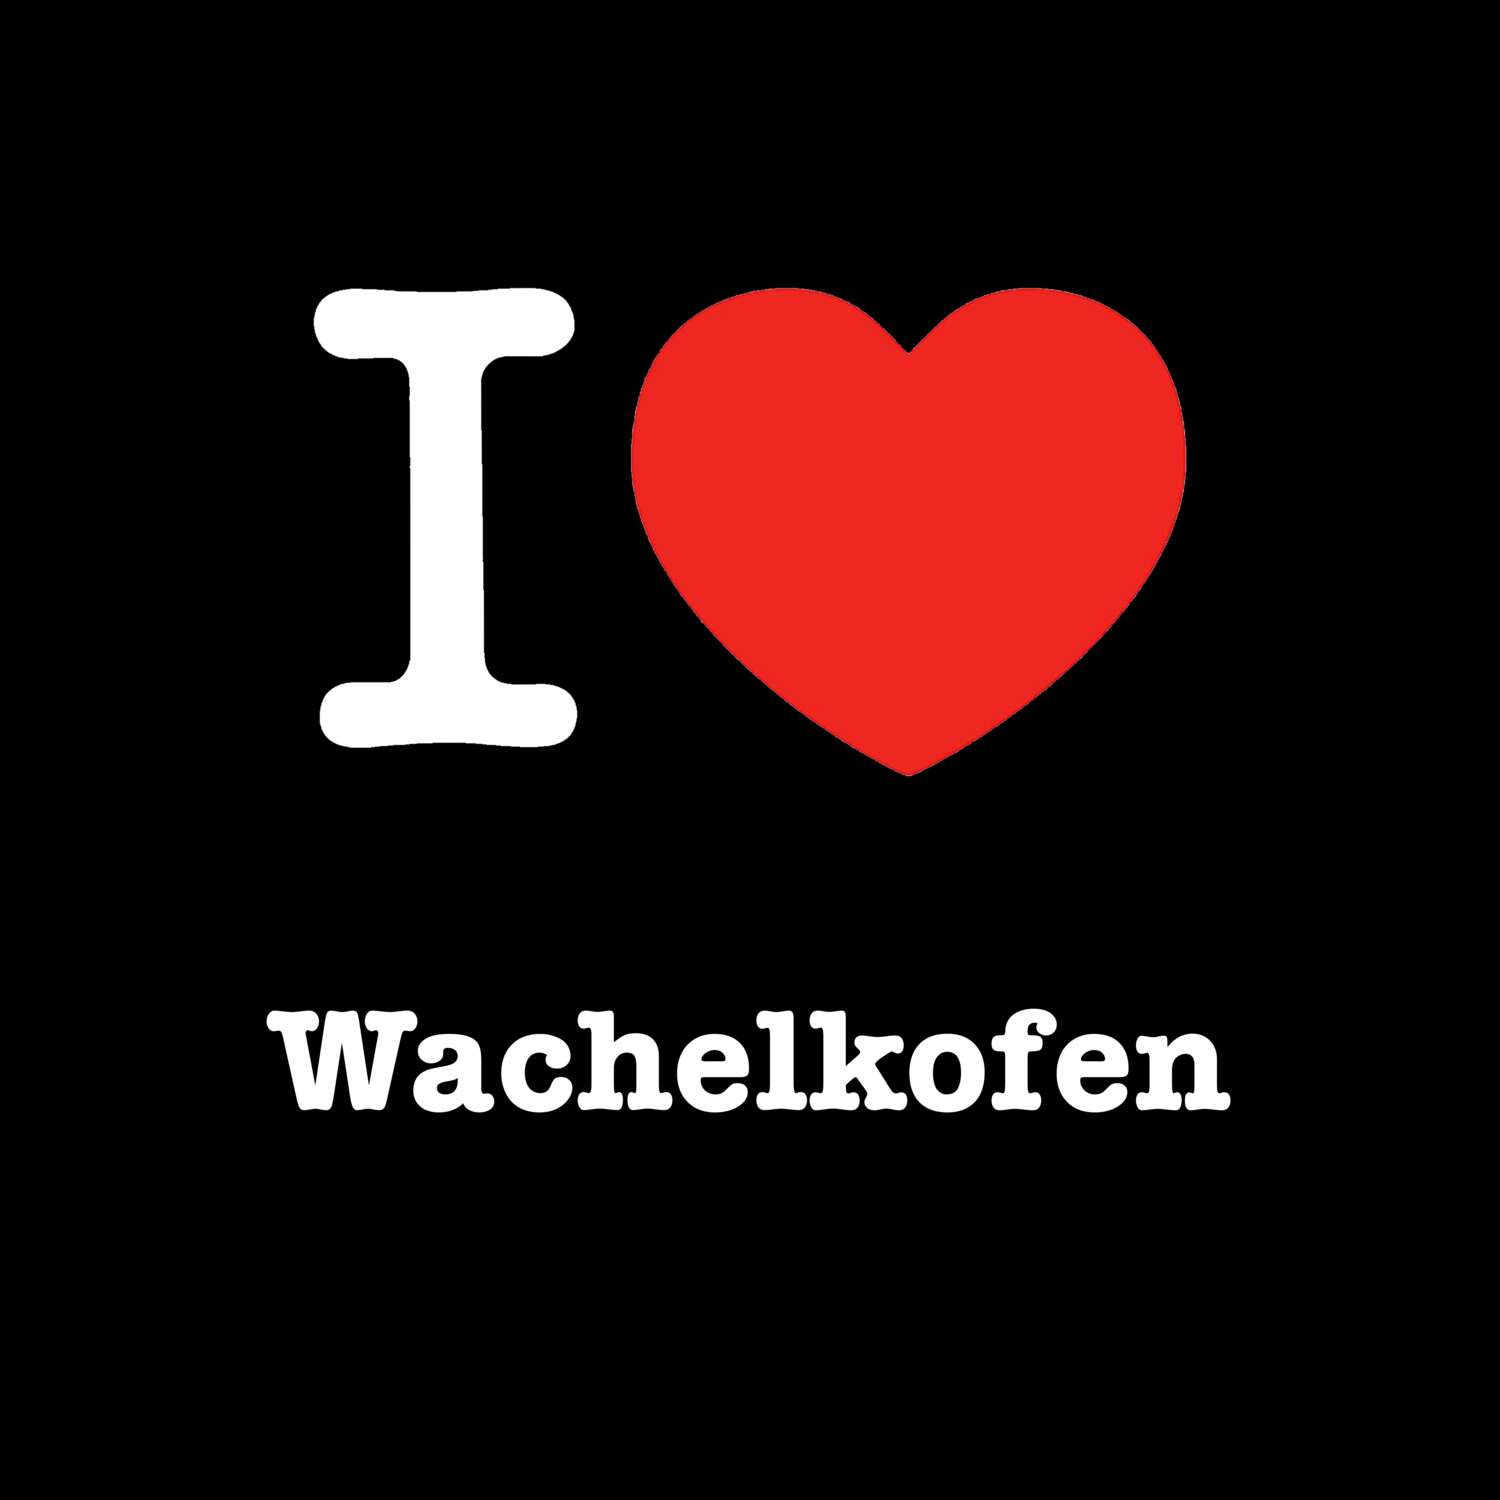 Wachelkofen T-Shirt »I love«